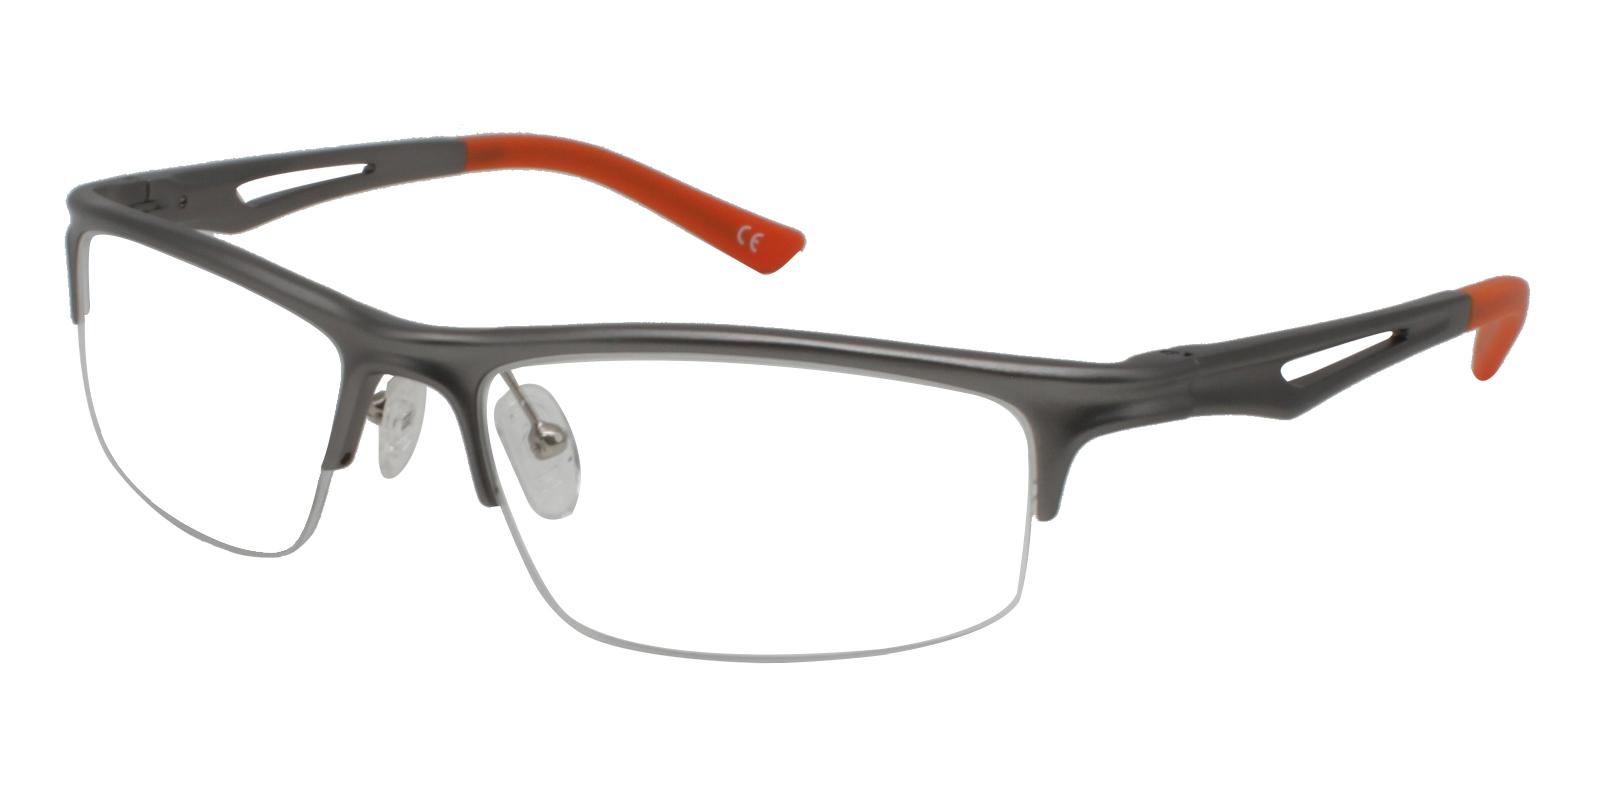 Mariner Gun Metal SpringHinges , Eyeglasses , NosePads Frames from ABBE Glasses